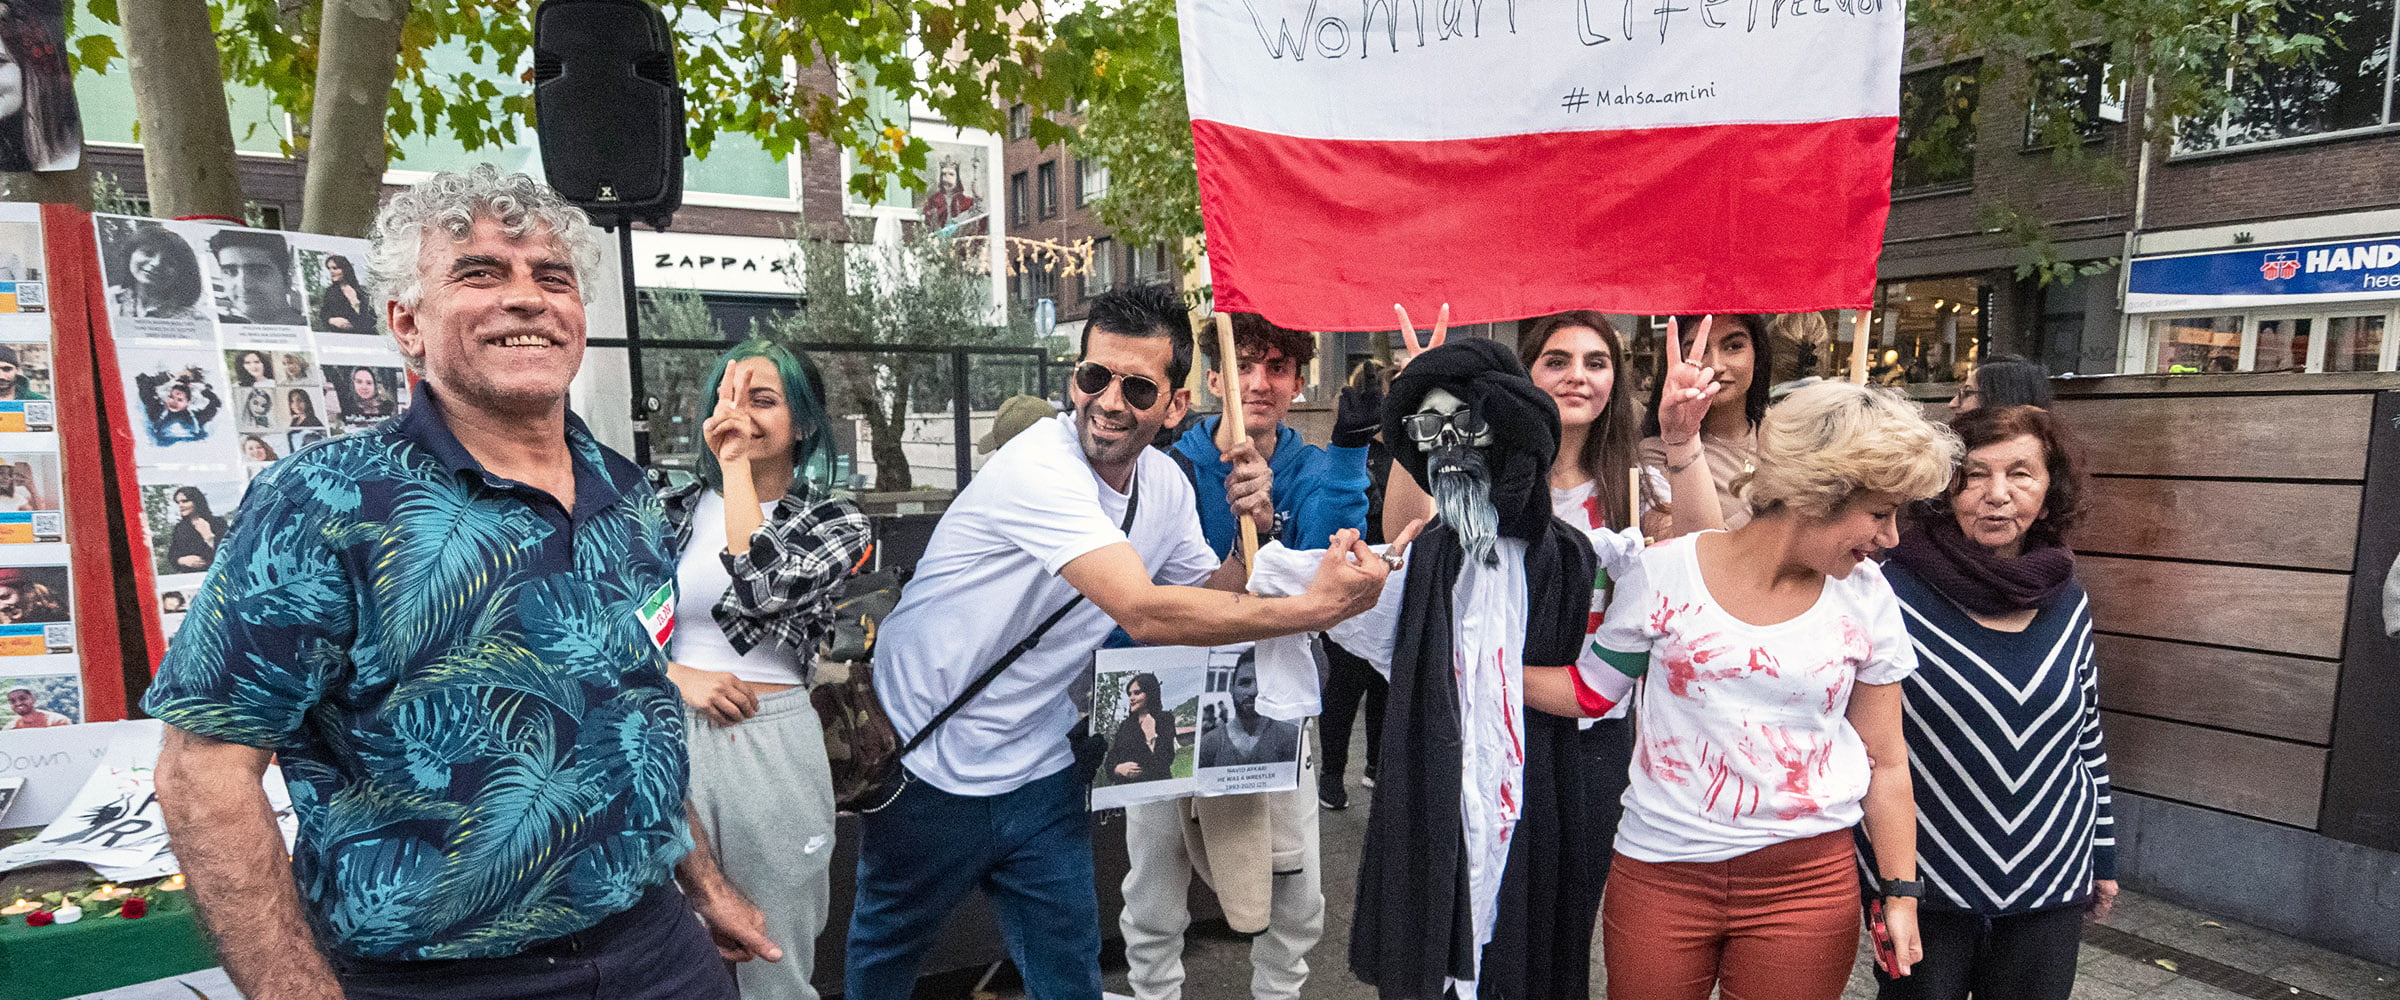 Demo Iran in Nijmegen 𝑫𝒐𝒘𝒏 𝒘𝒊𝒕𝒉 𝑲𝒉𝒂𝒎𝒆𝒏𝒆𝒊